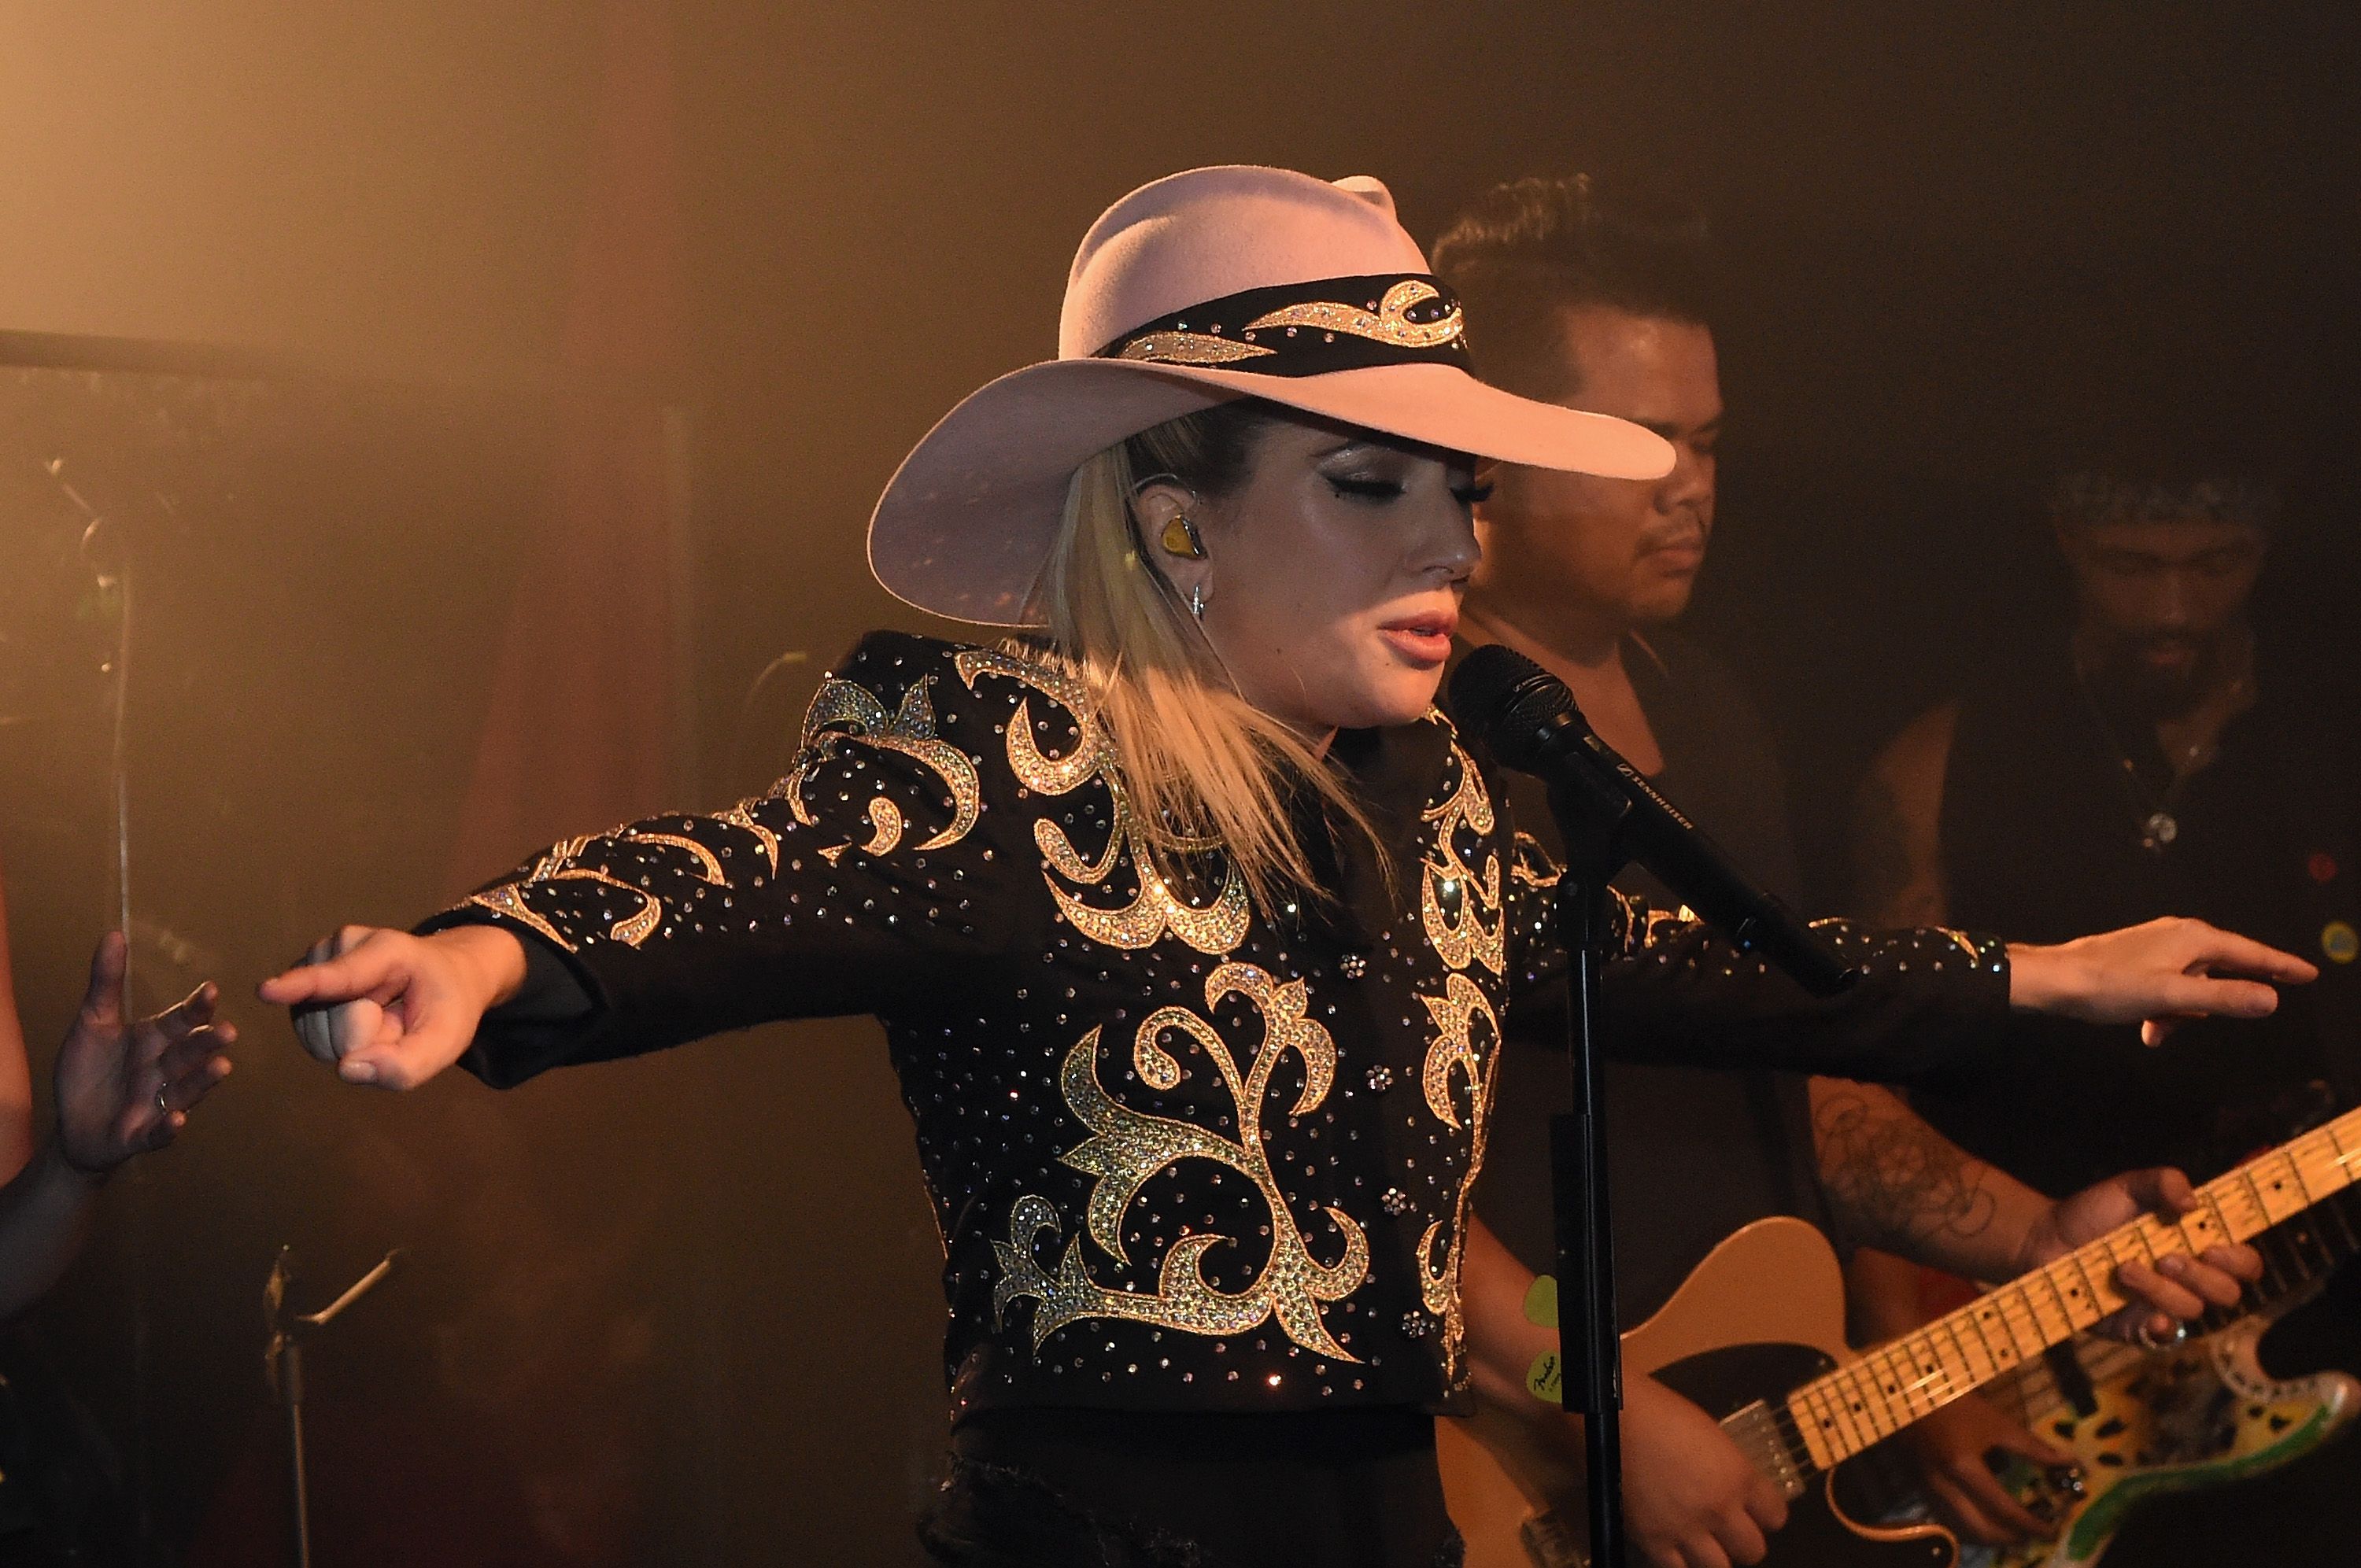 Lady Gaga Shares Pre Show Iv Drip She Needed Ahead Of Dive Bar Gig